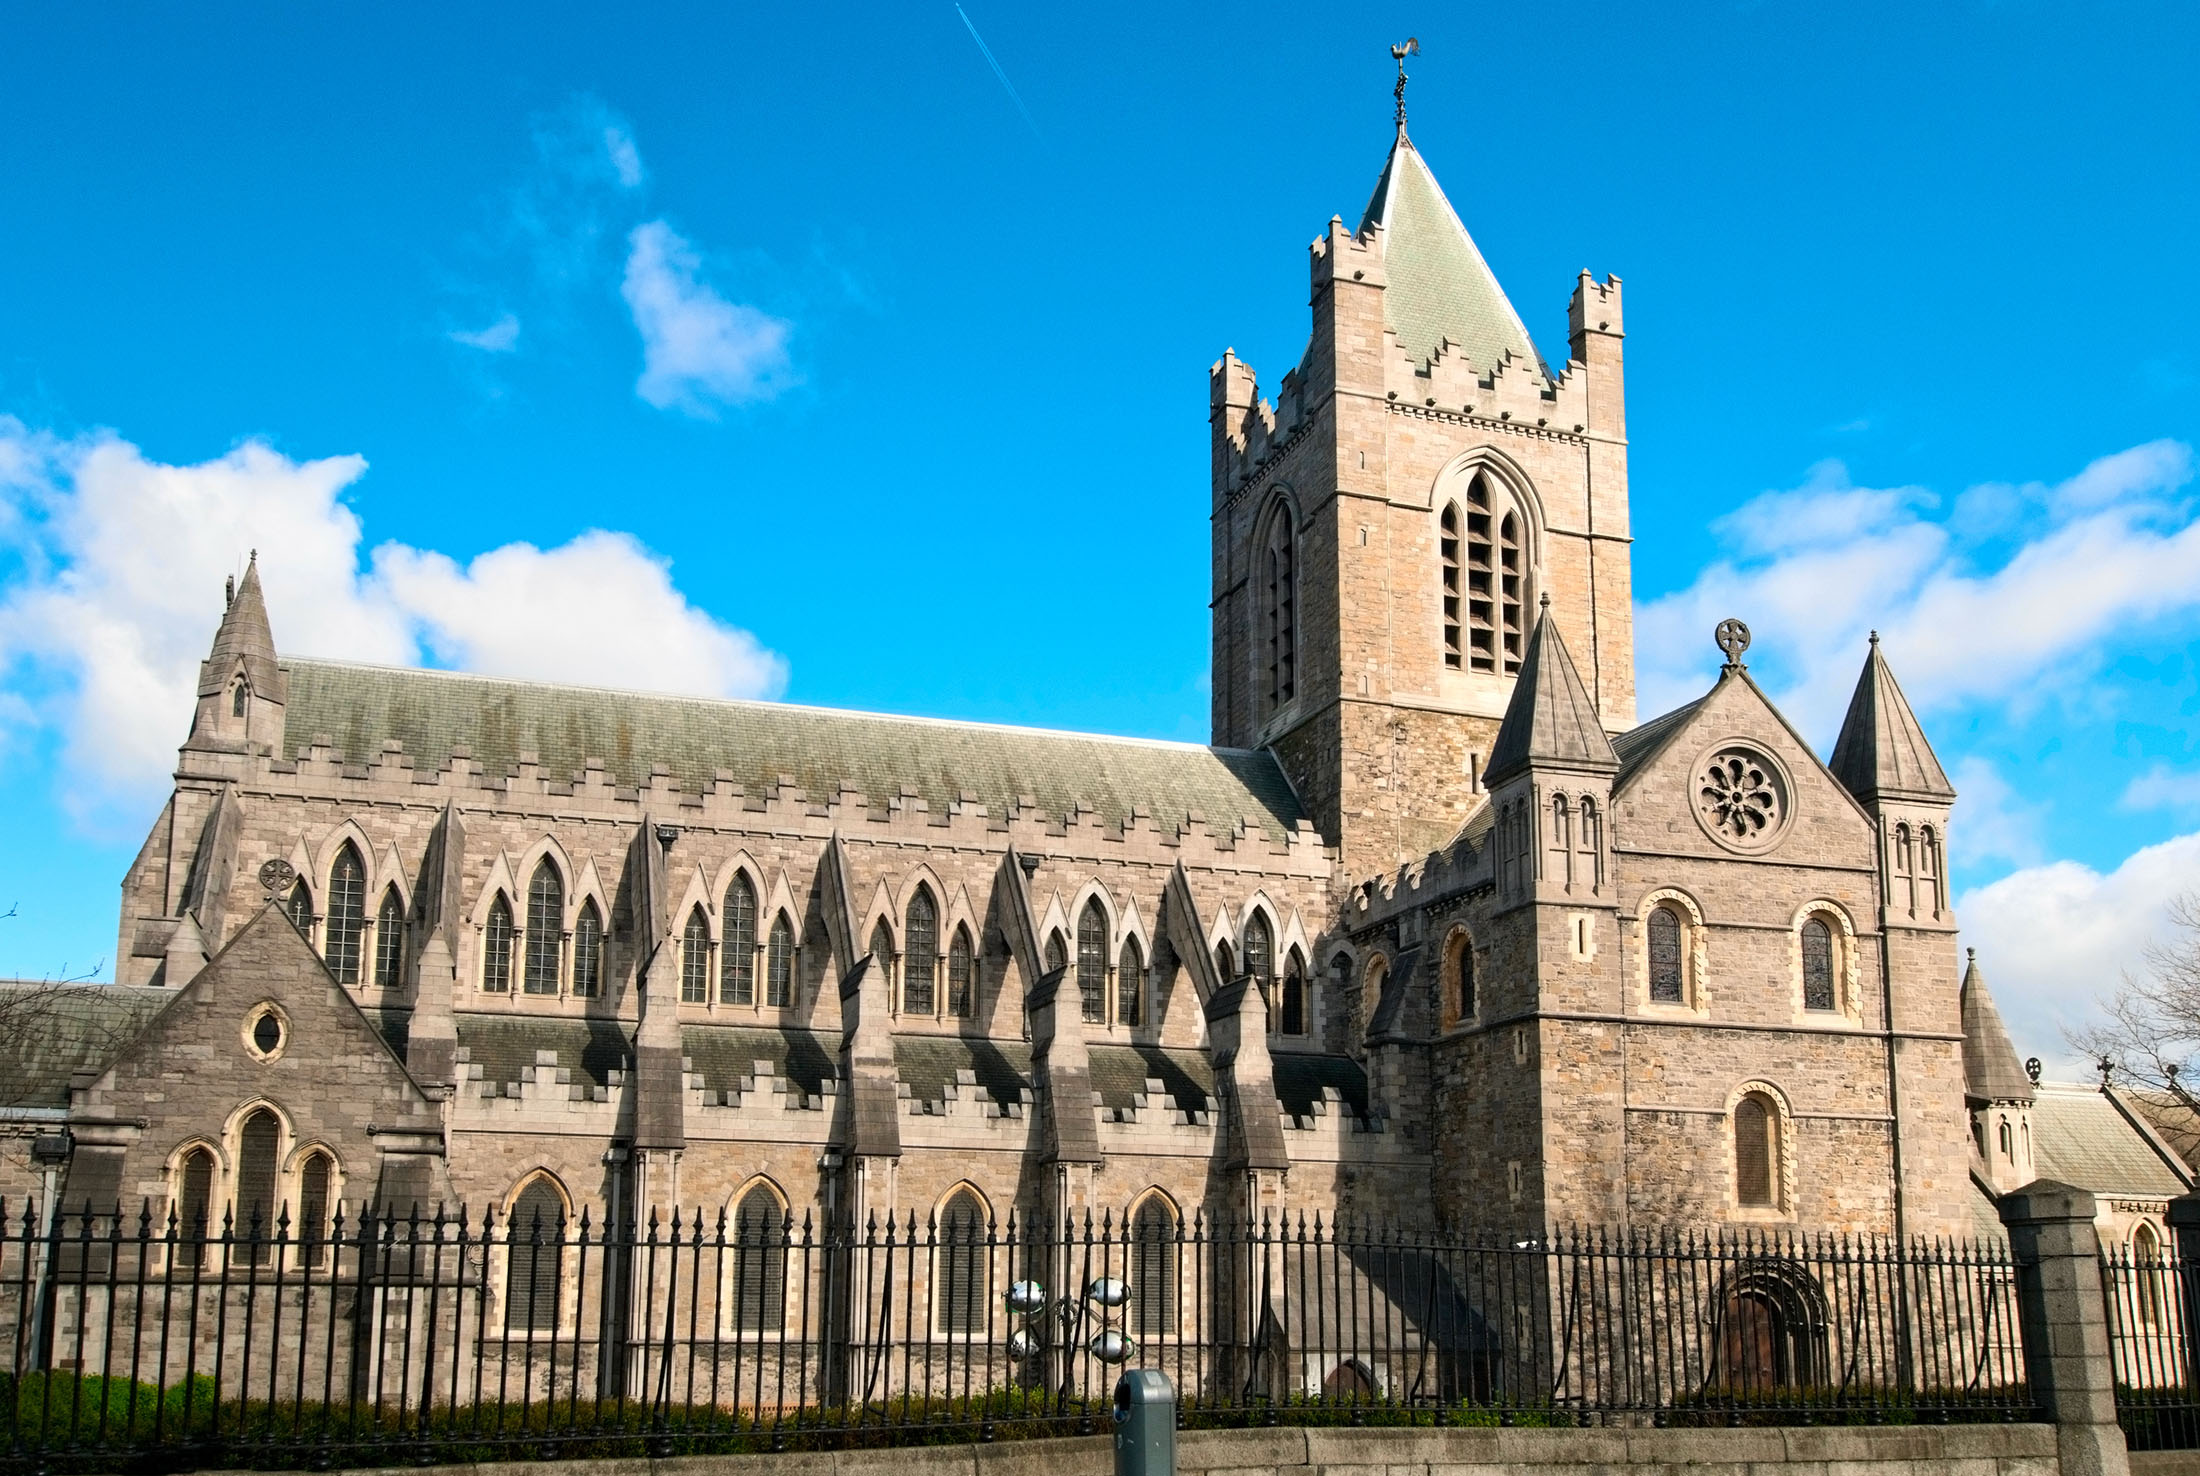 christ church catherdral - dublin, ireland